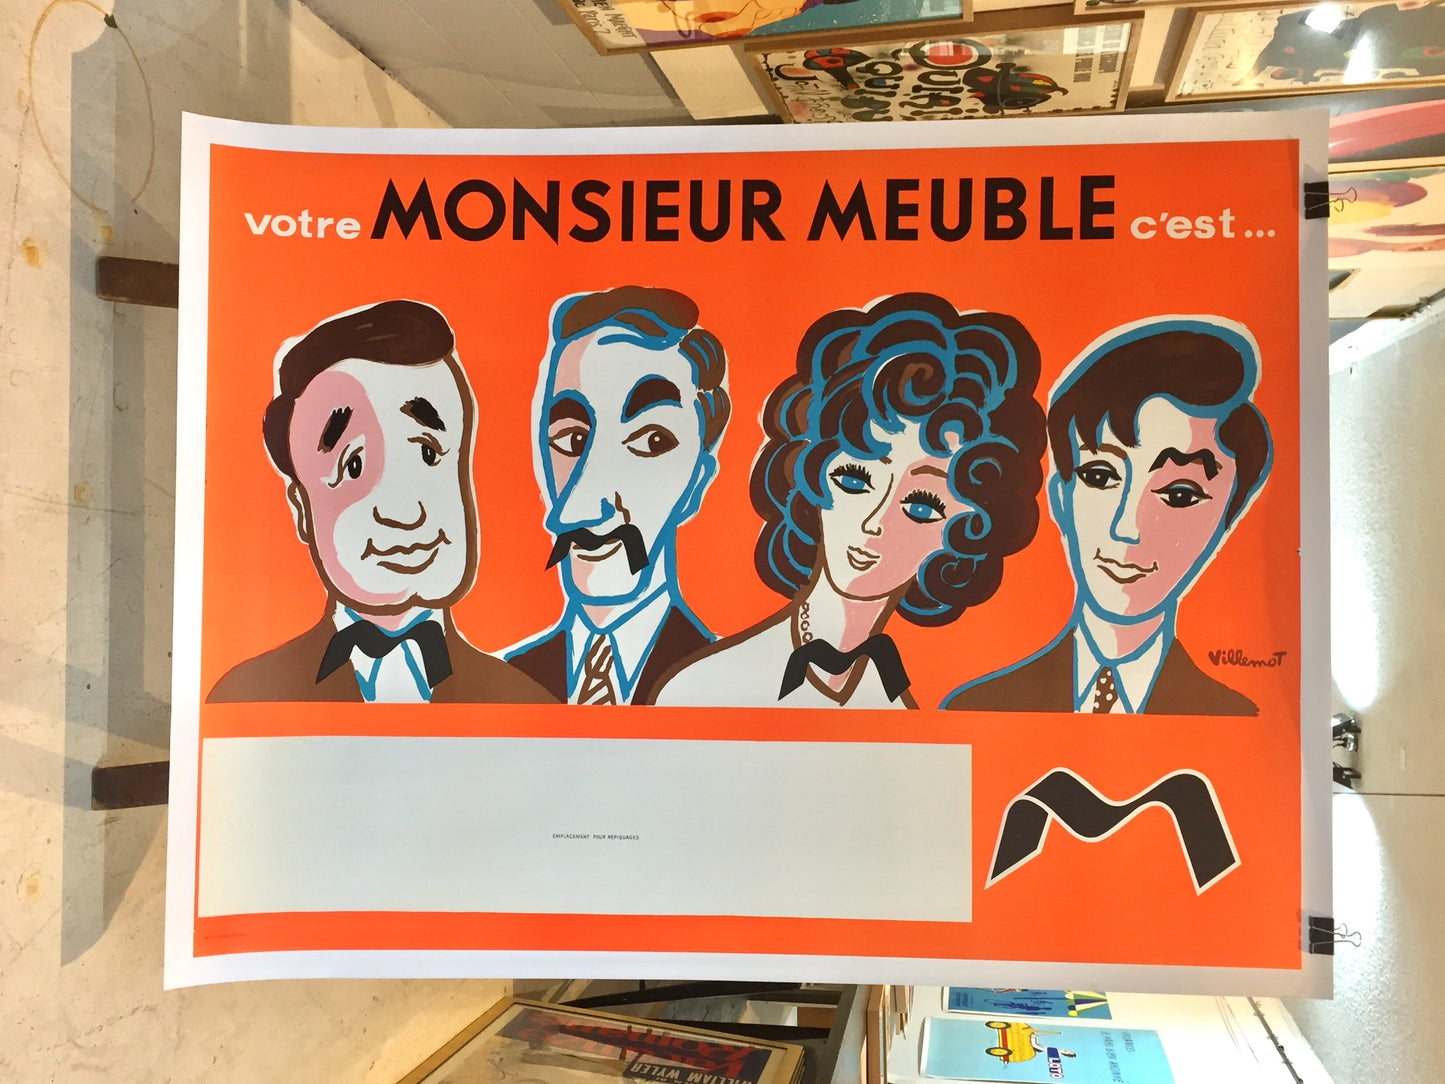 Monsieur Meuble by Villemot